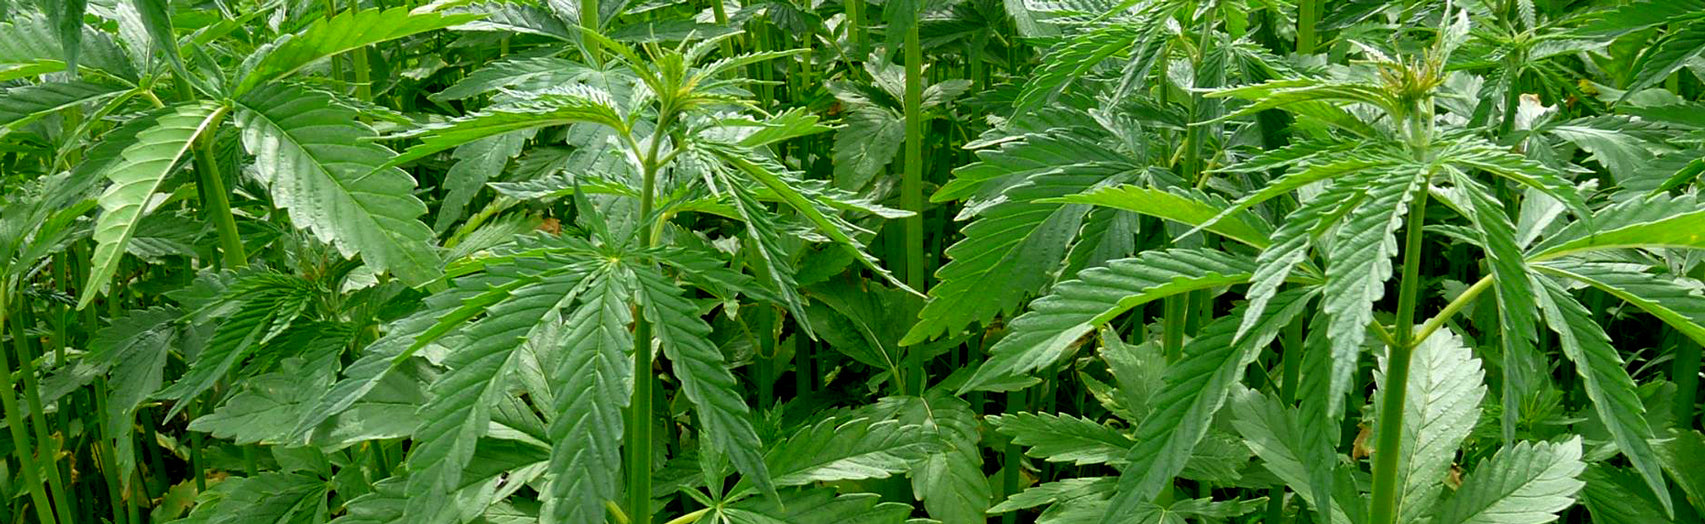 Field of hemp (Cannabis sativa L.) growing outdoors